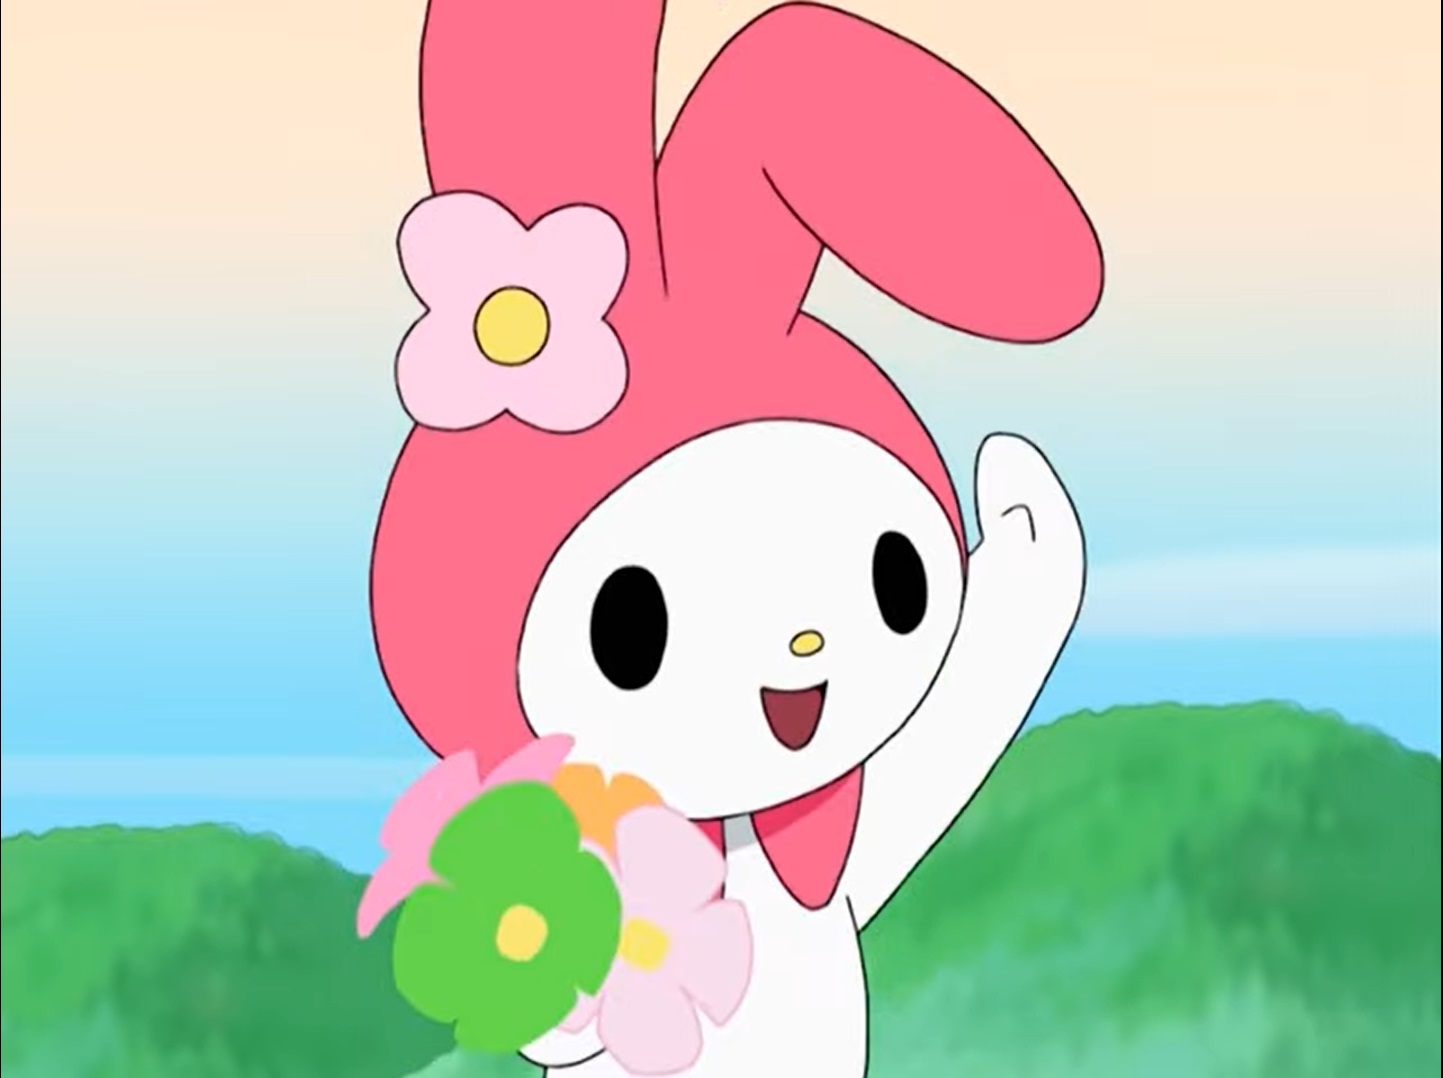 Melody as an Anime Cat Girl by KrazeeKartoonz on DeviantArt